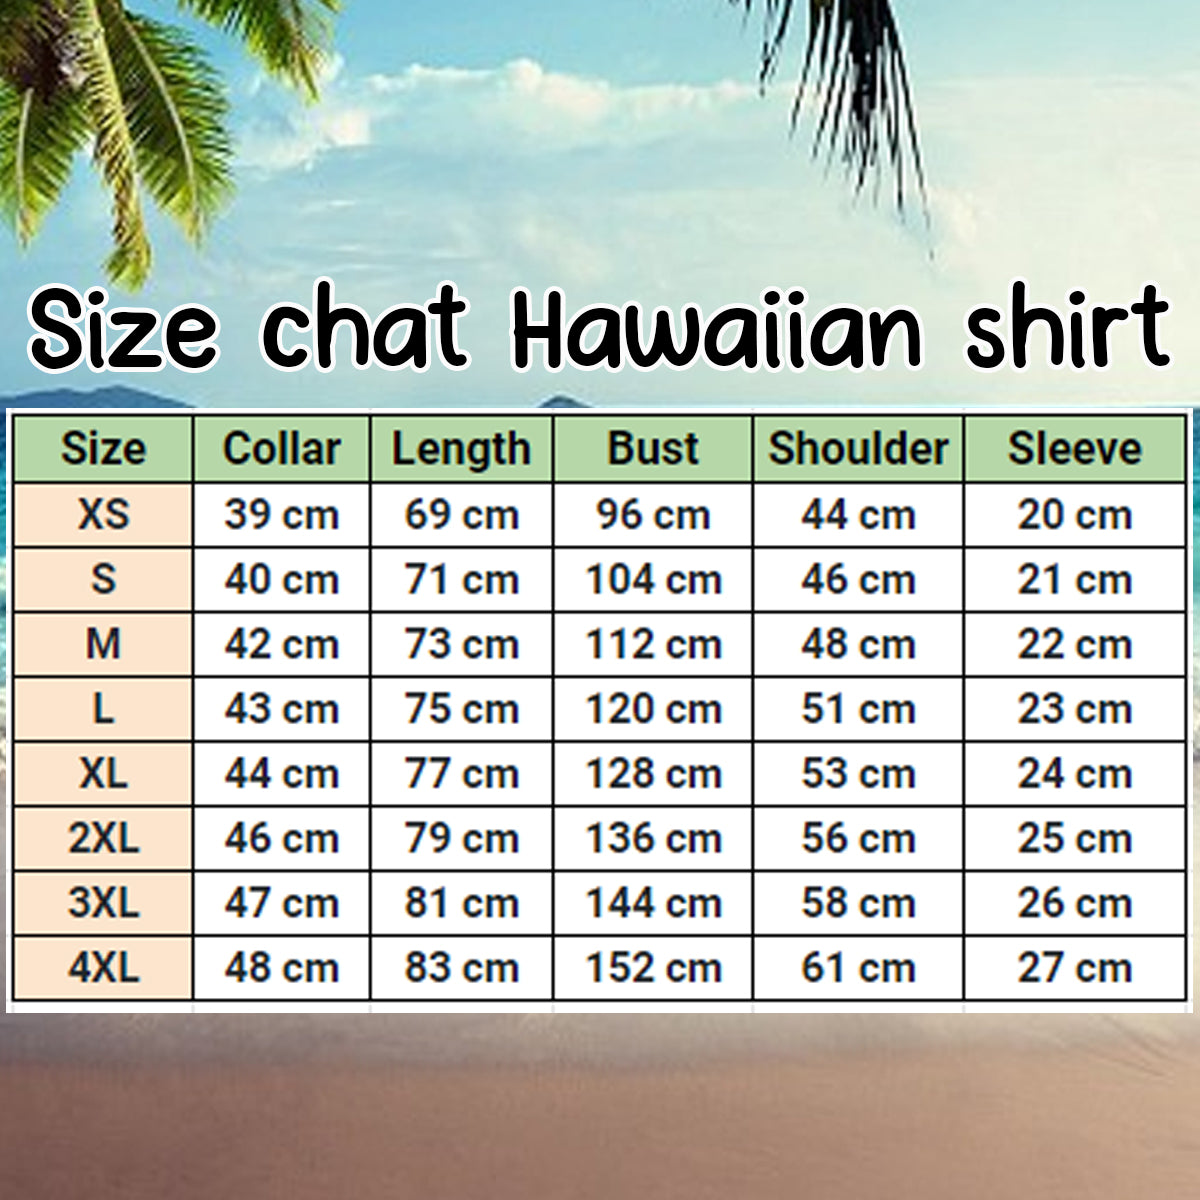 Shark Lovers Gift Hawaiian Shirt/ Shark aloha shirt/ Summer Short Sleeve Hawaiian Aloha Shirt for men/ Women